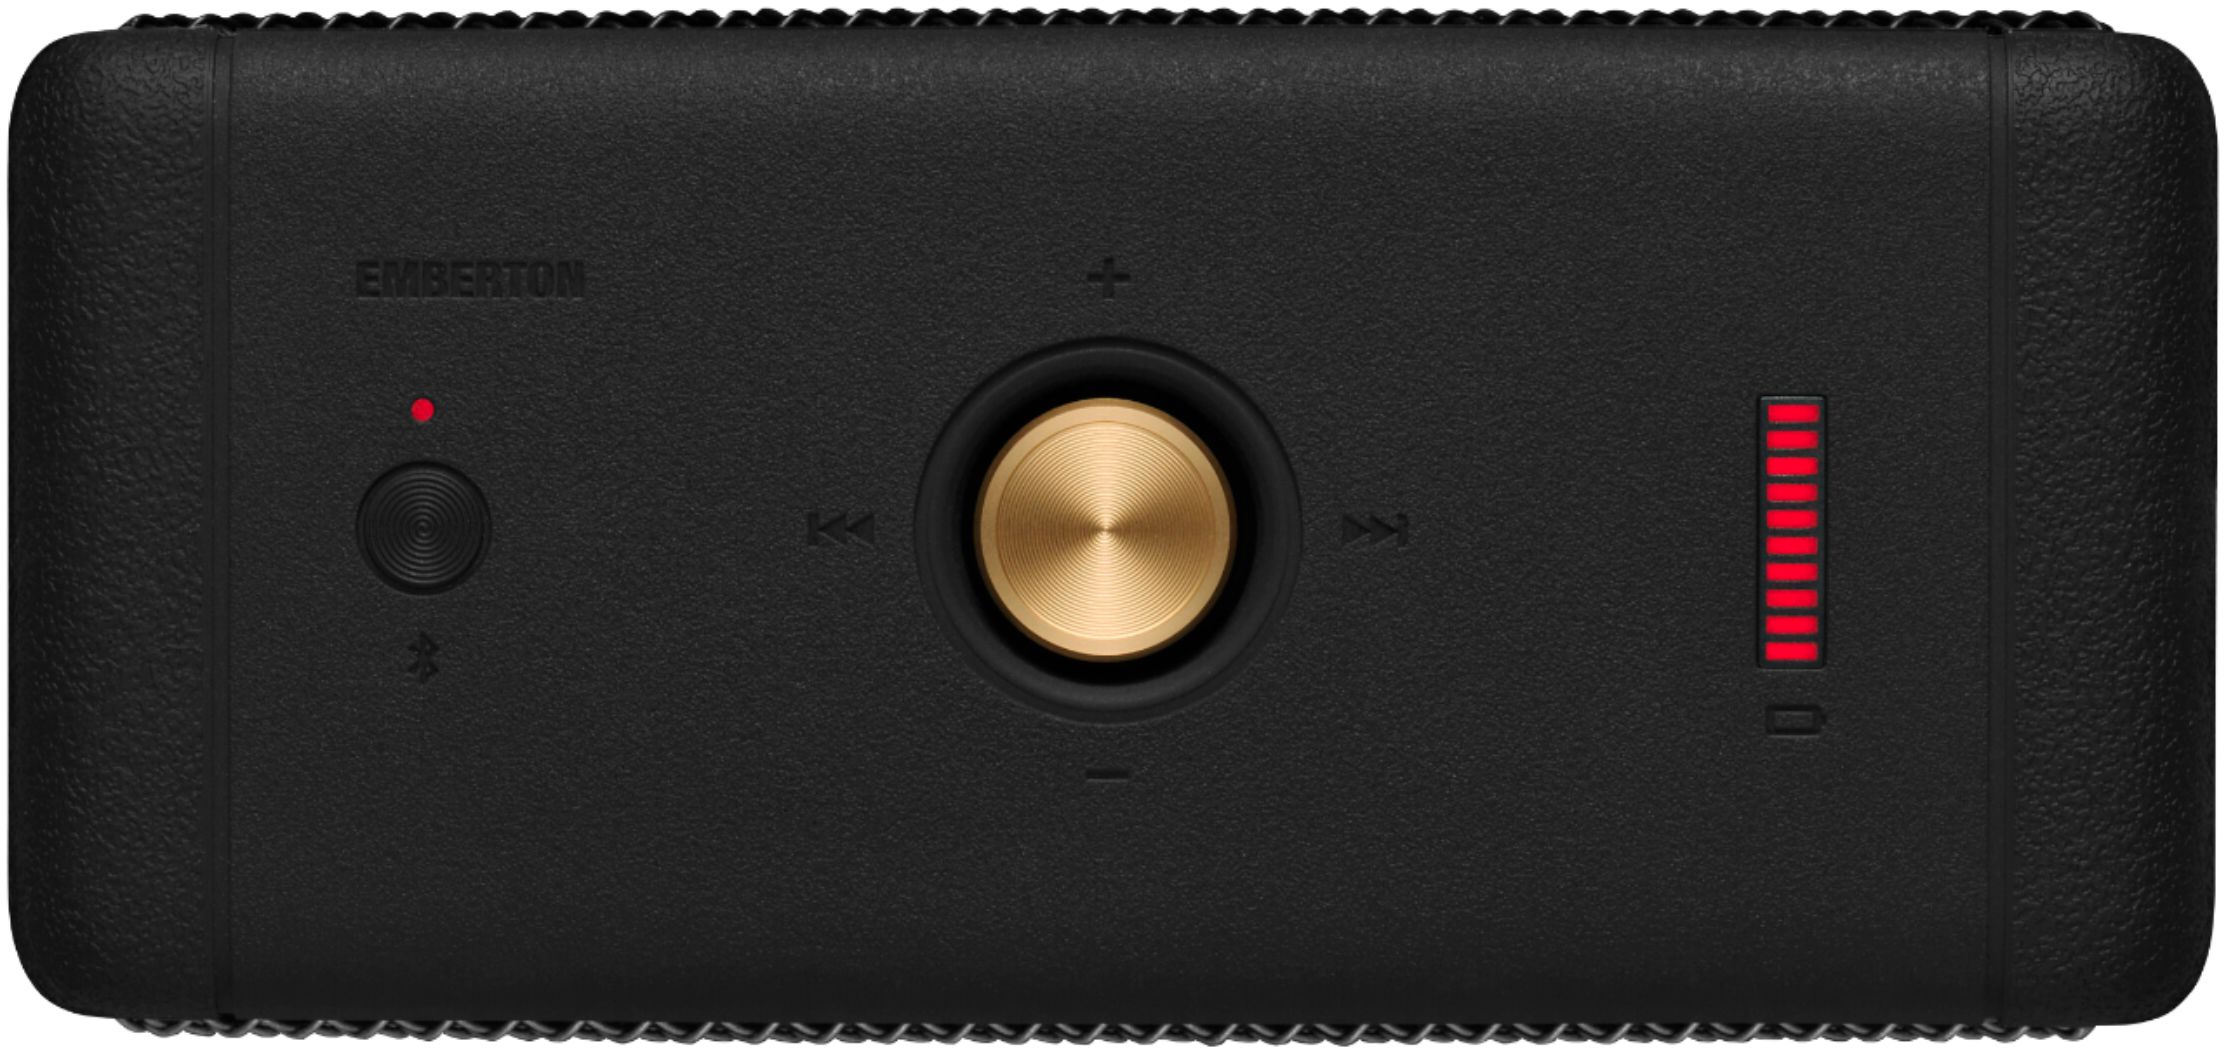 Emberton Marshall - Speaker Best 1001908 Bluetooth Buy Portable Black